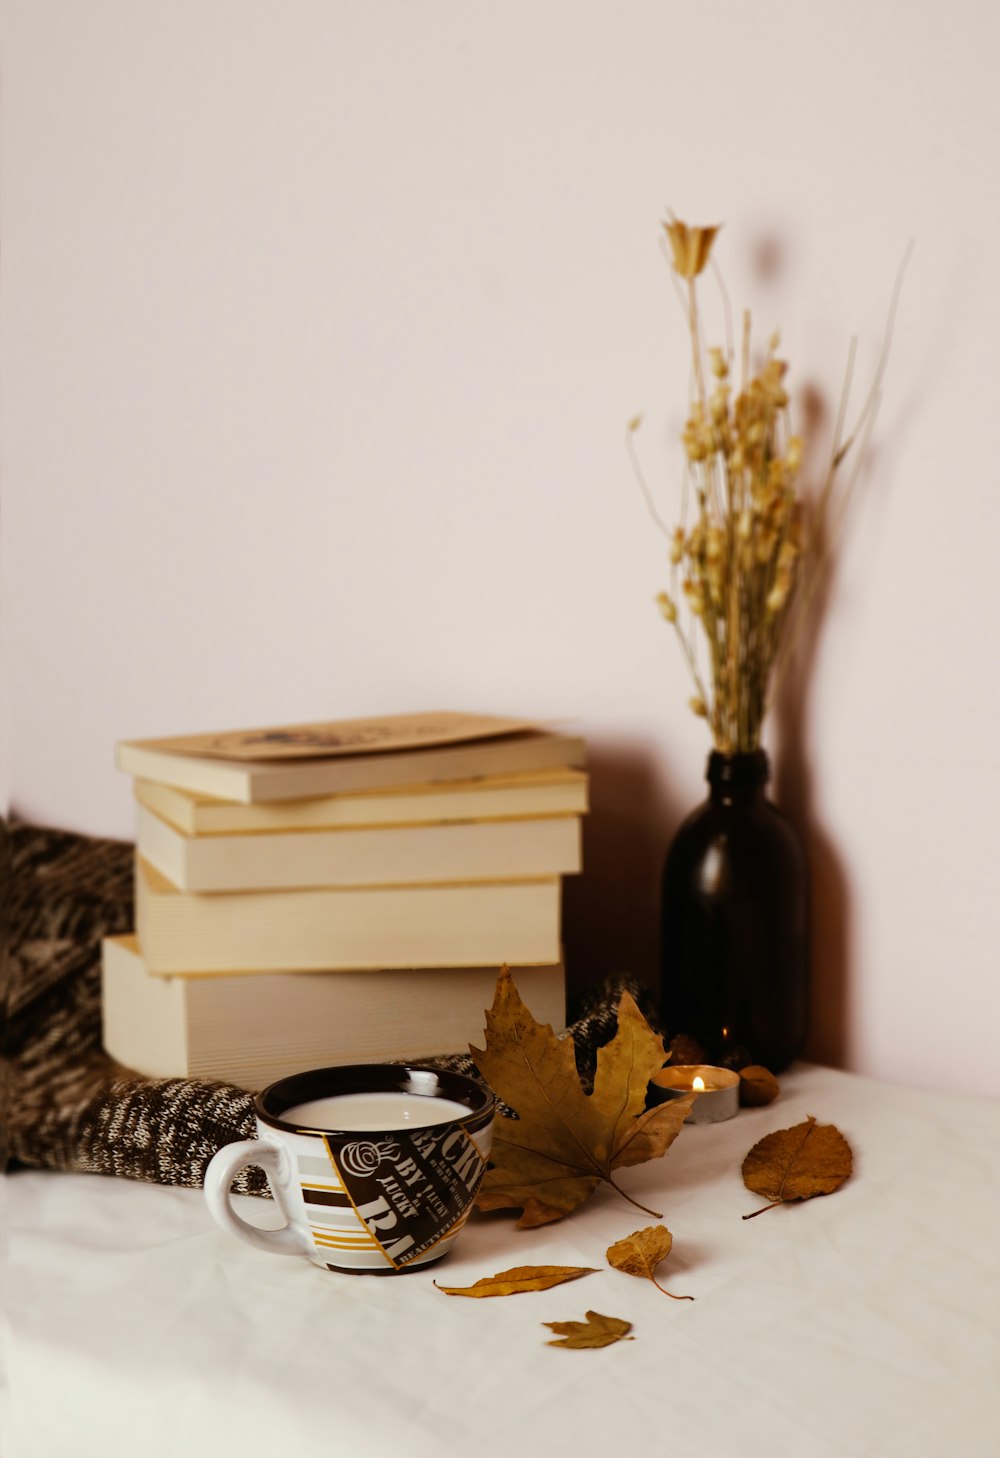 black and white ceramic mug beside brown wooden book